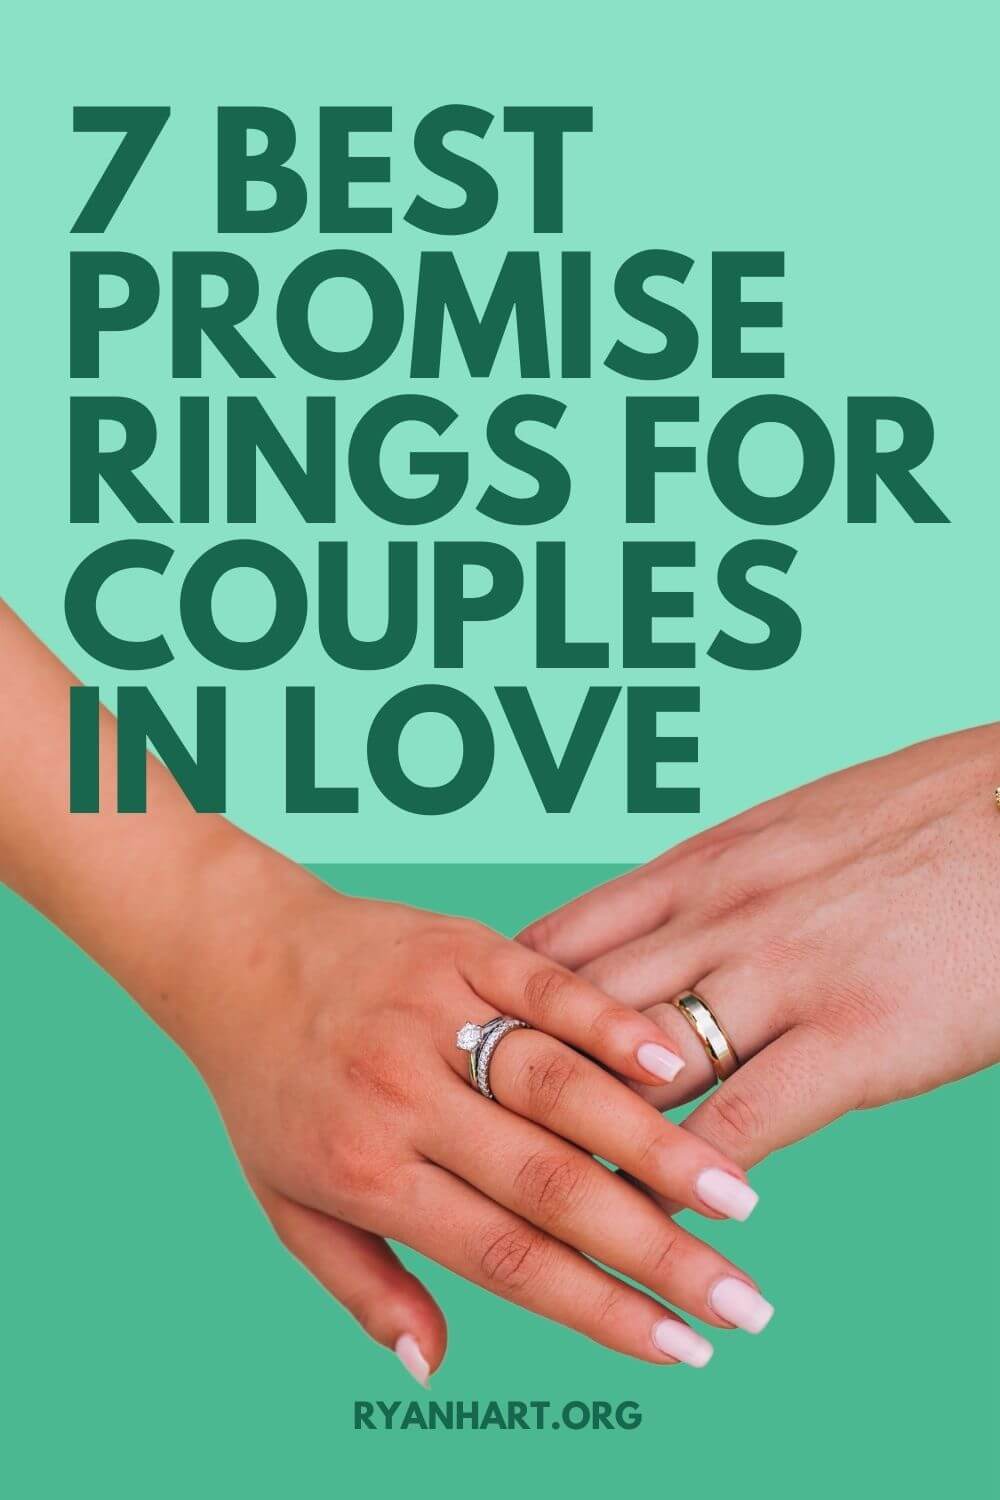 couple in love wearing rings